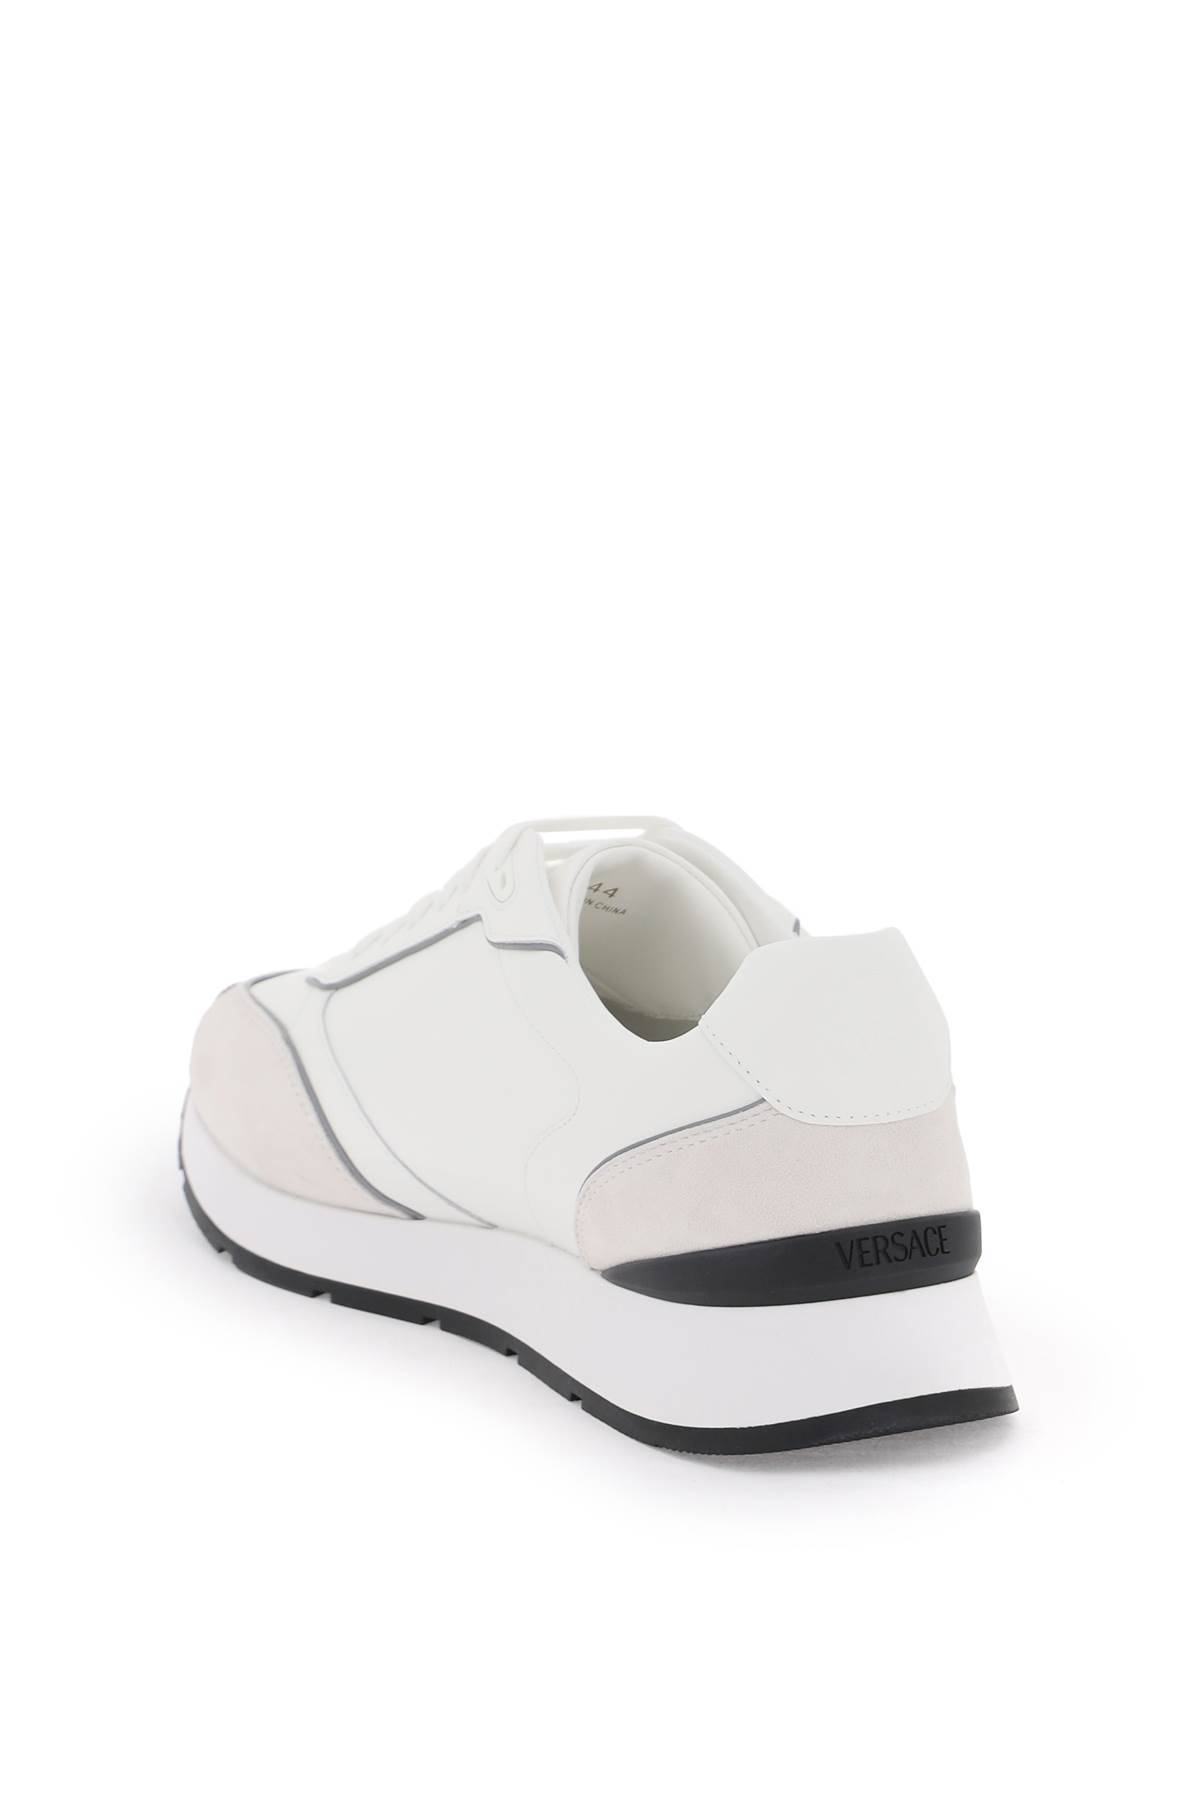 Shop Versace Milano Runner Sneakers In White